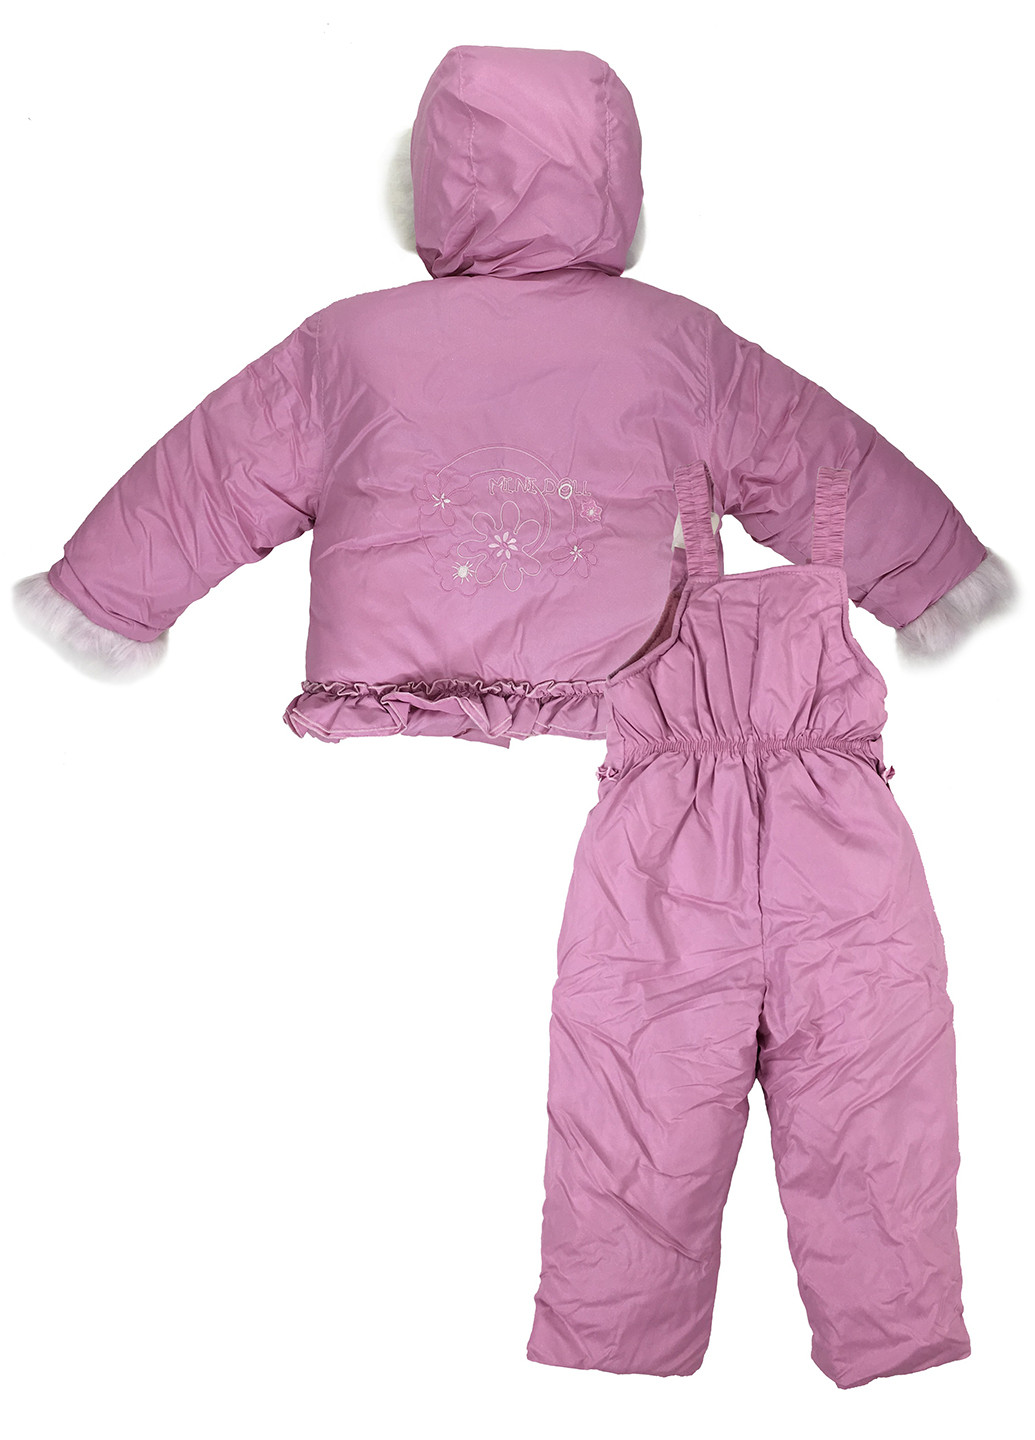 Розовый зимний комплект (куртка, комбинезон) Mira